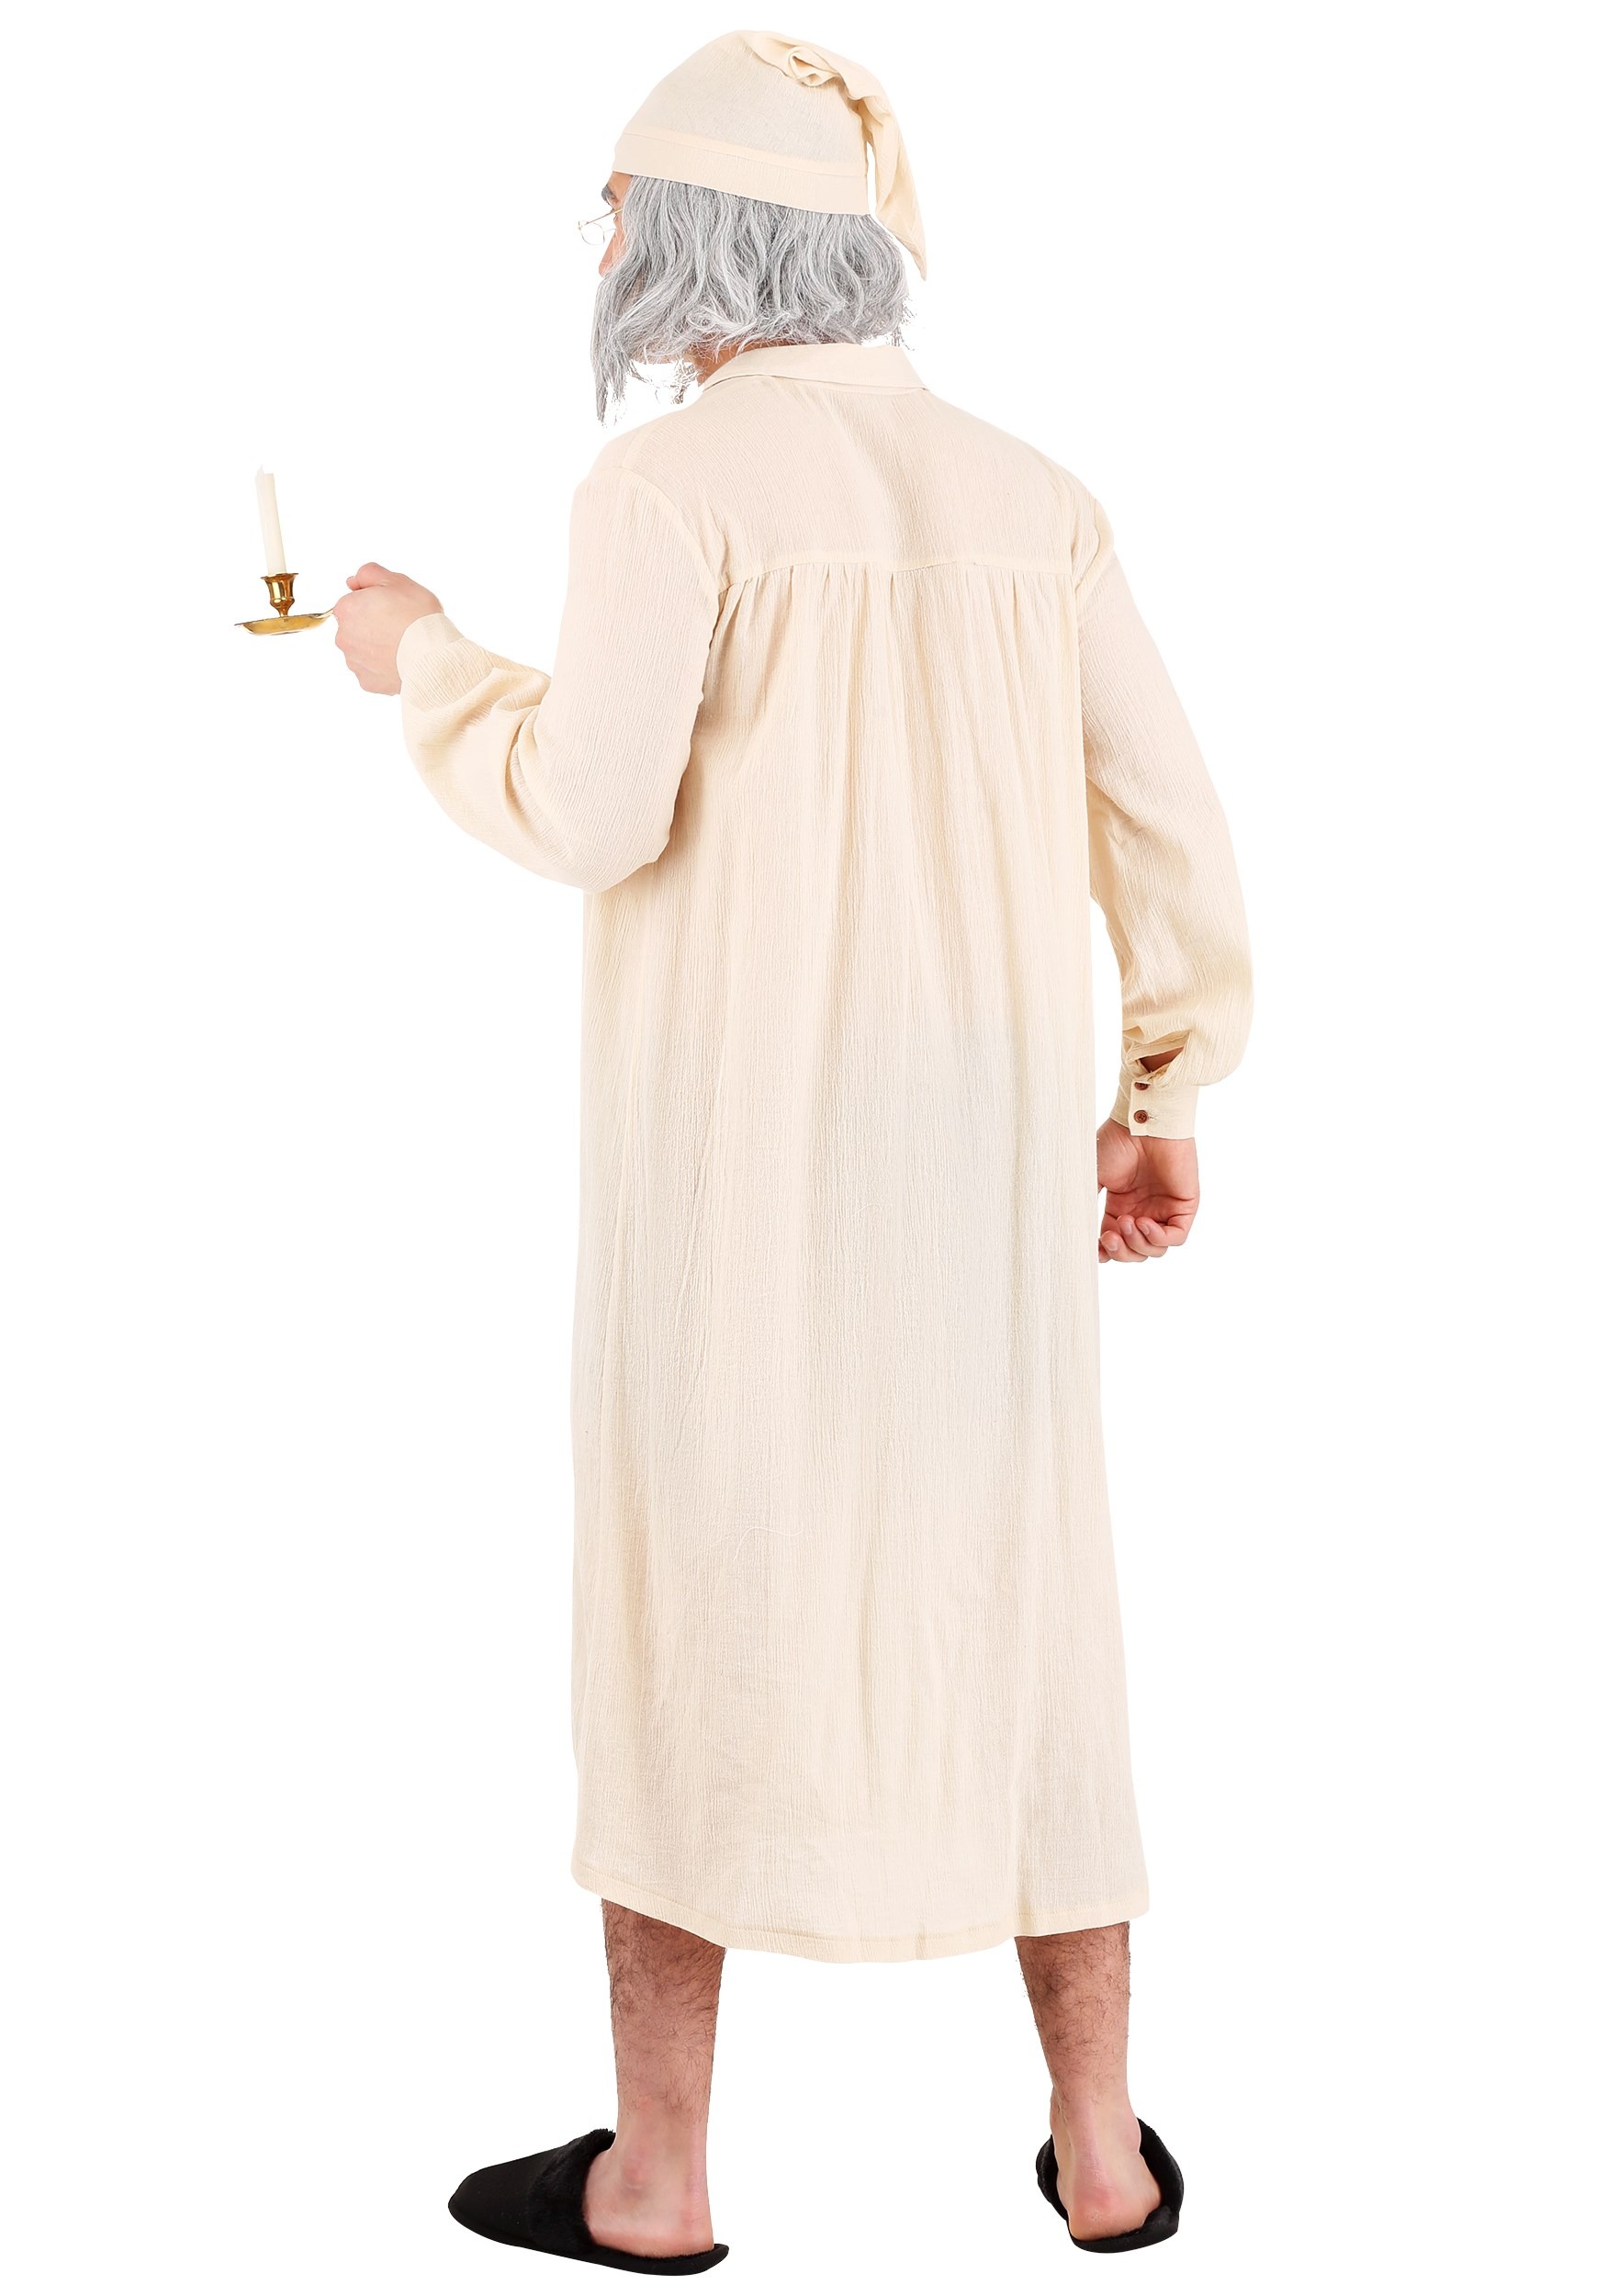 Humbug Nightgown Men's Costume